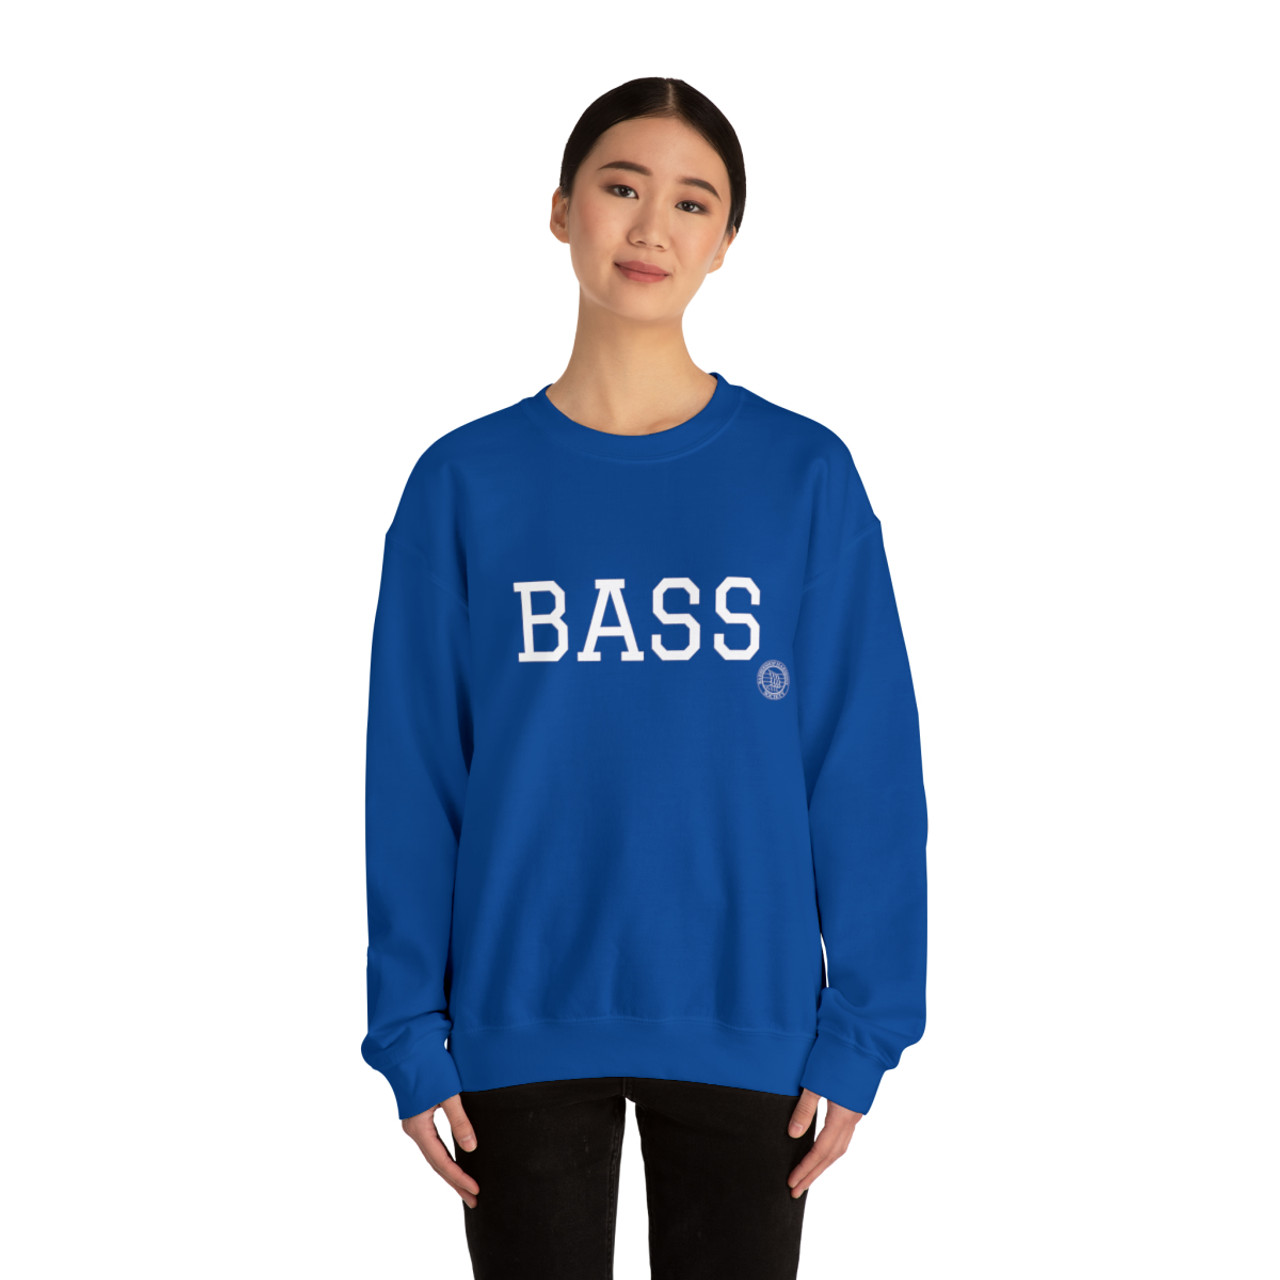 BASS Crewneck Sweatshirt- Multiple Colors